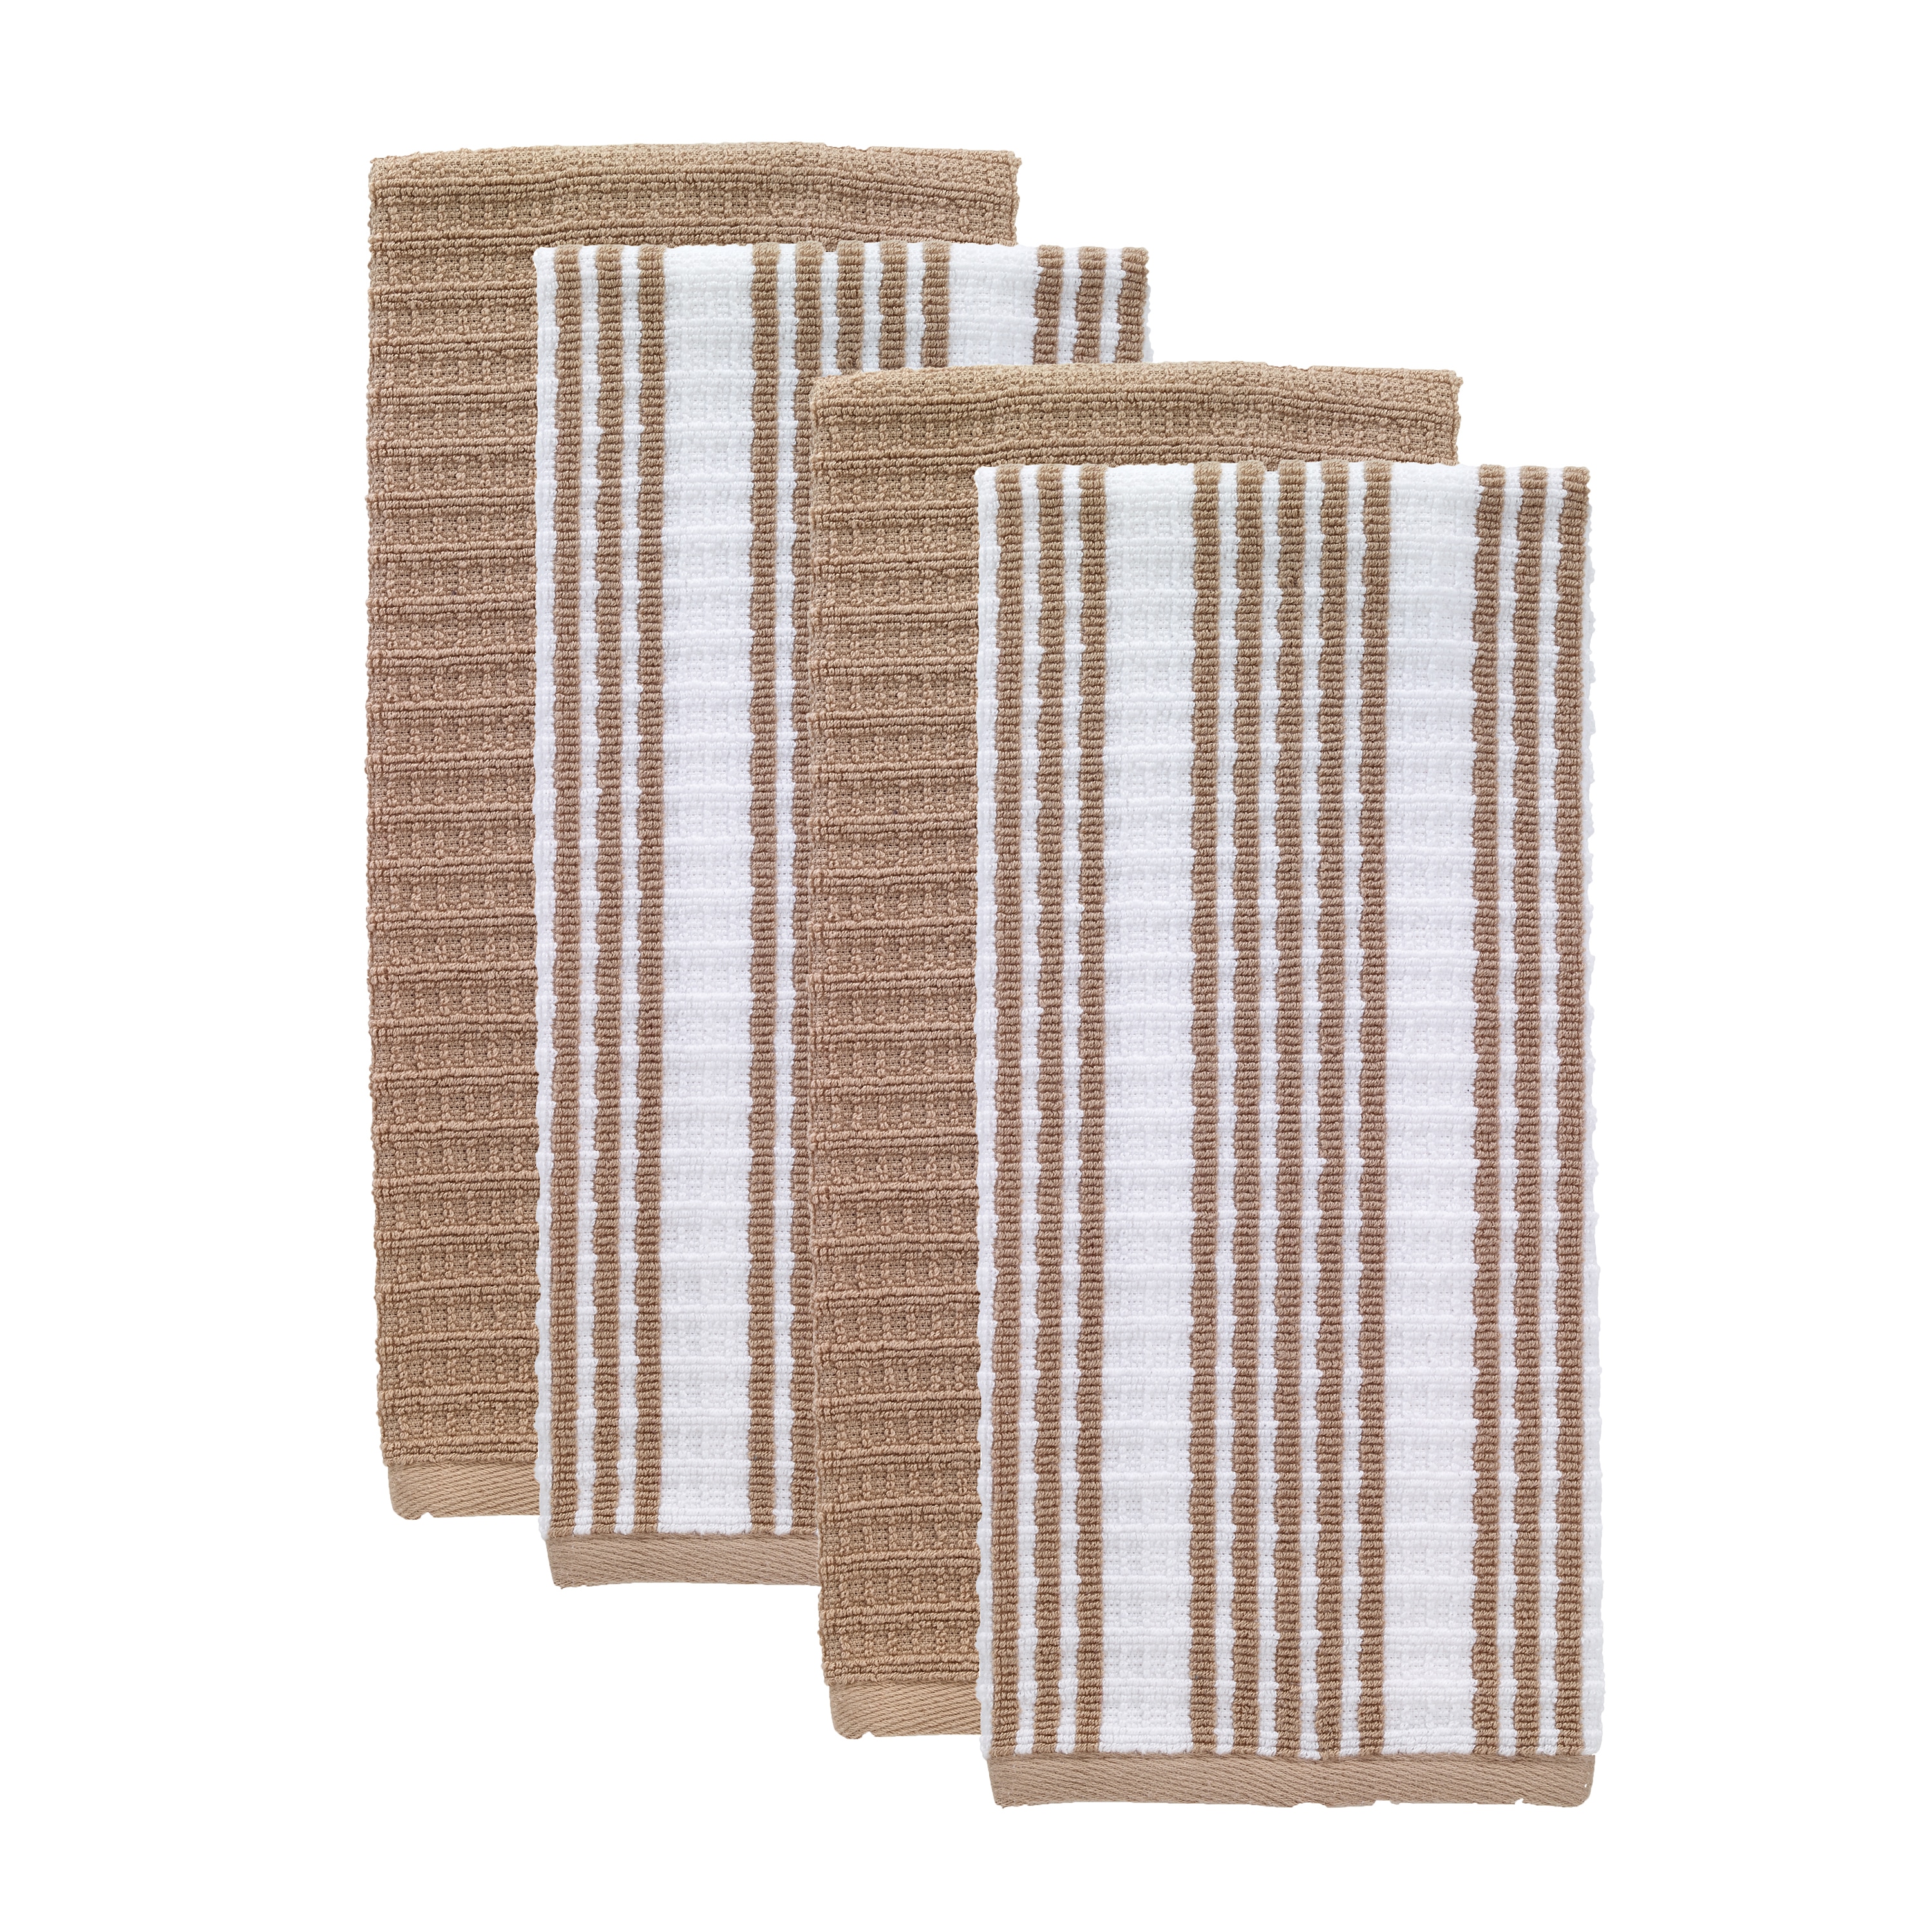 https://ak1.ostkcdn.com/images/products/15872033/T-fal-Textiles-4-Pack-Solid-Stripe-Waffle-Terry-Kitchen-Dish-Towel-Set-11ded57d-bcf5-4c1d-b144-395c96414d48.jpg